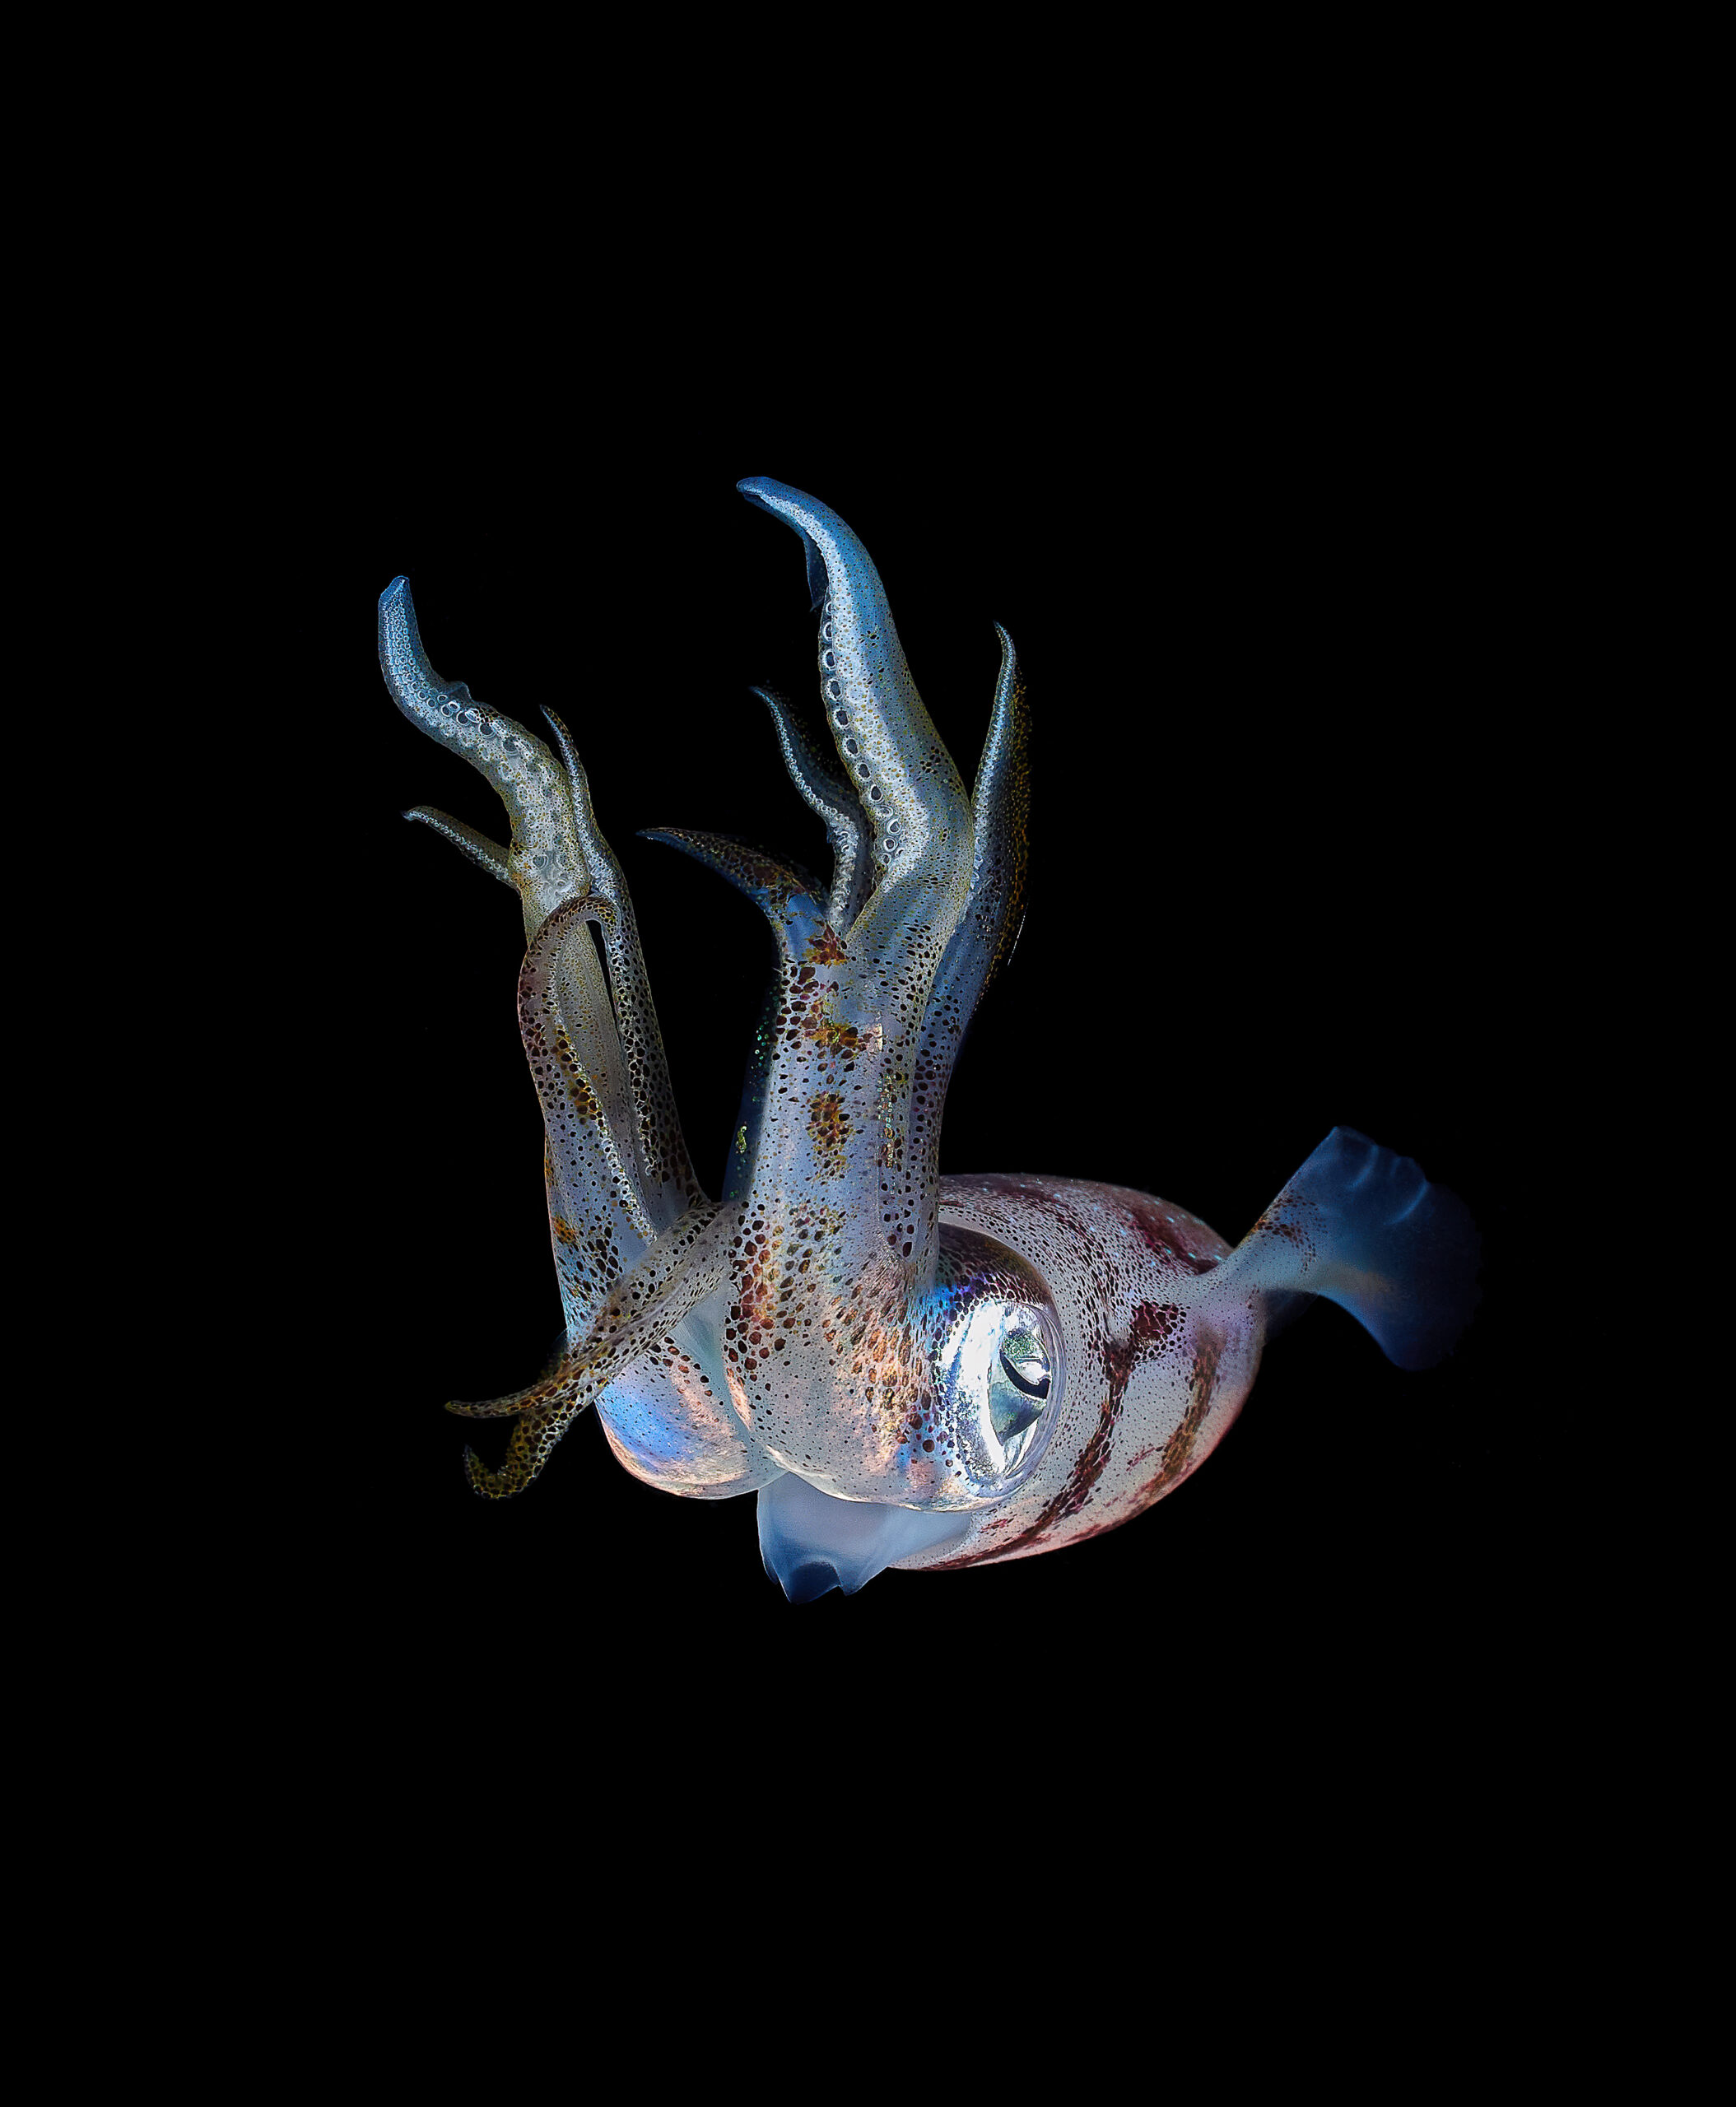 Caribbean reef squid (Sepioteuthis sepioidea) - oliheň karibská Bonaire freediving diving